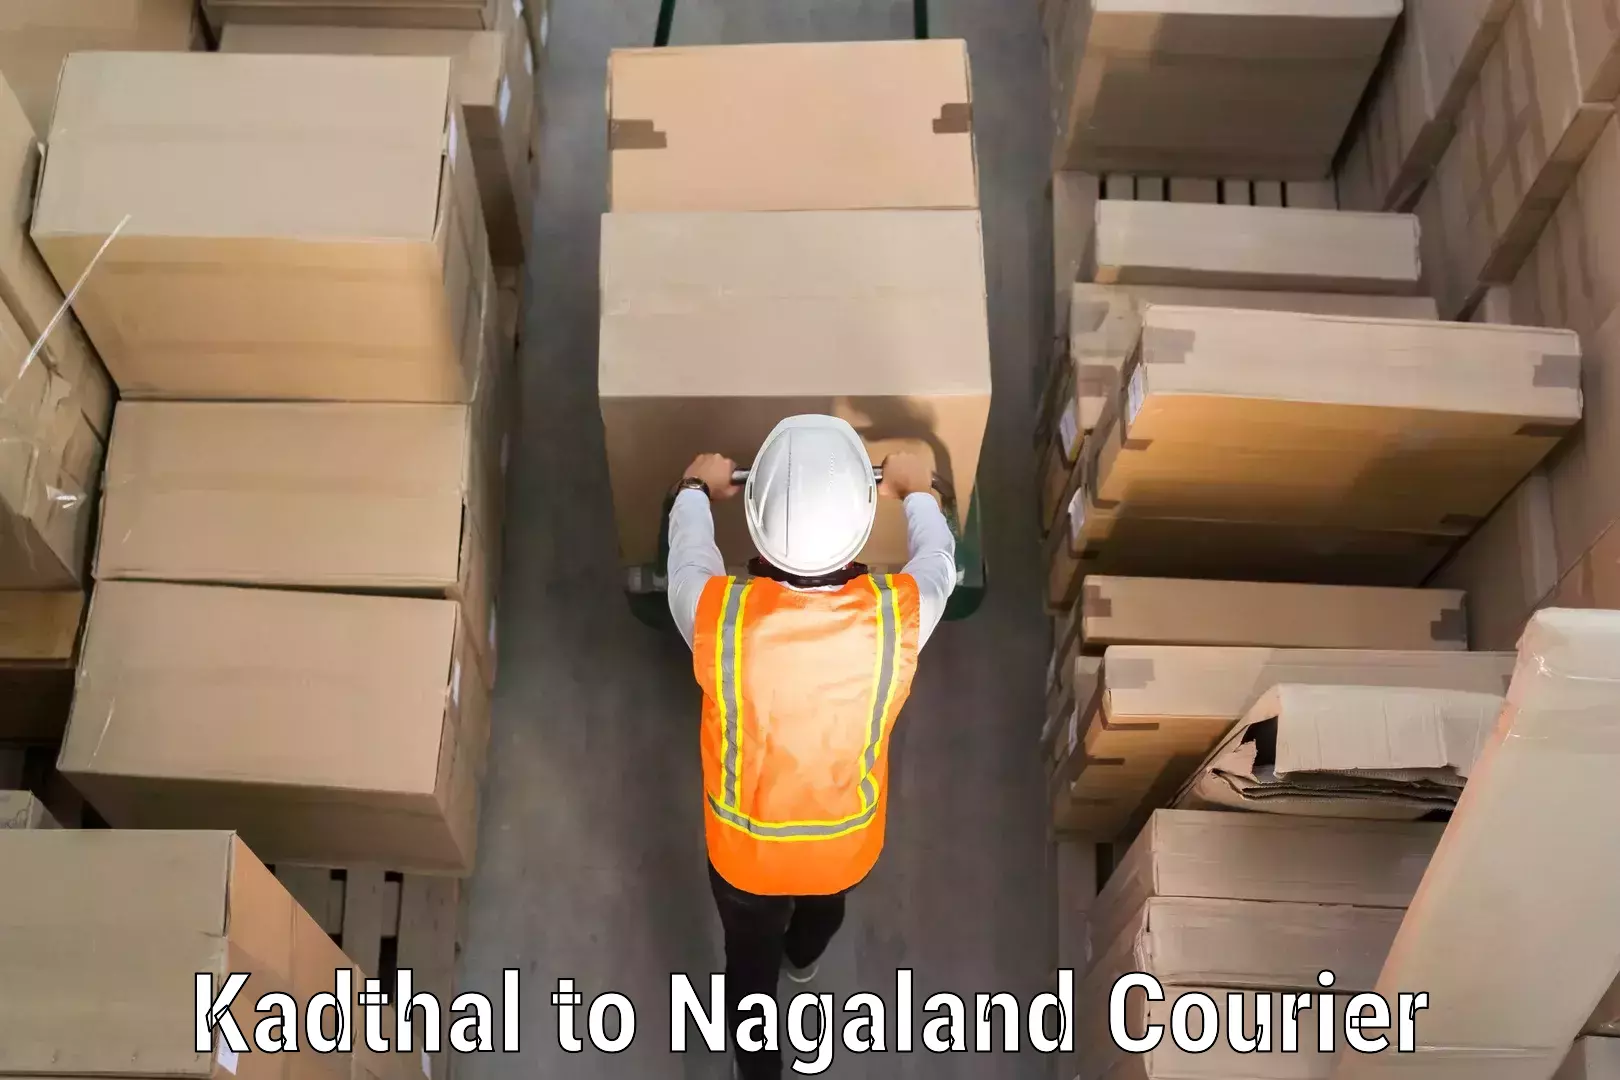 Luggage shipment specialists Kadthal to Nagaland